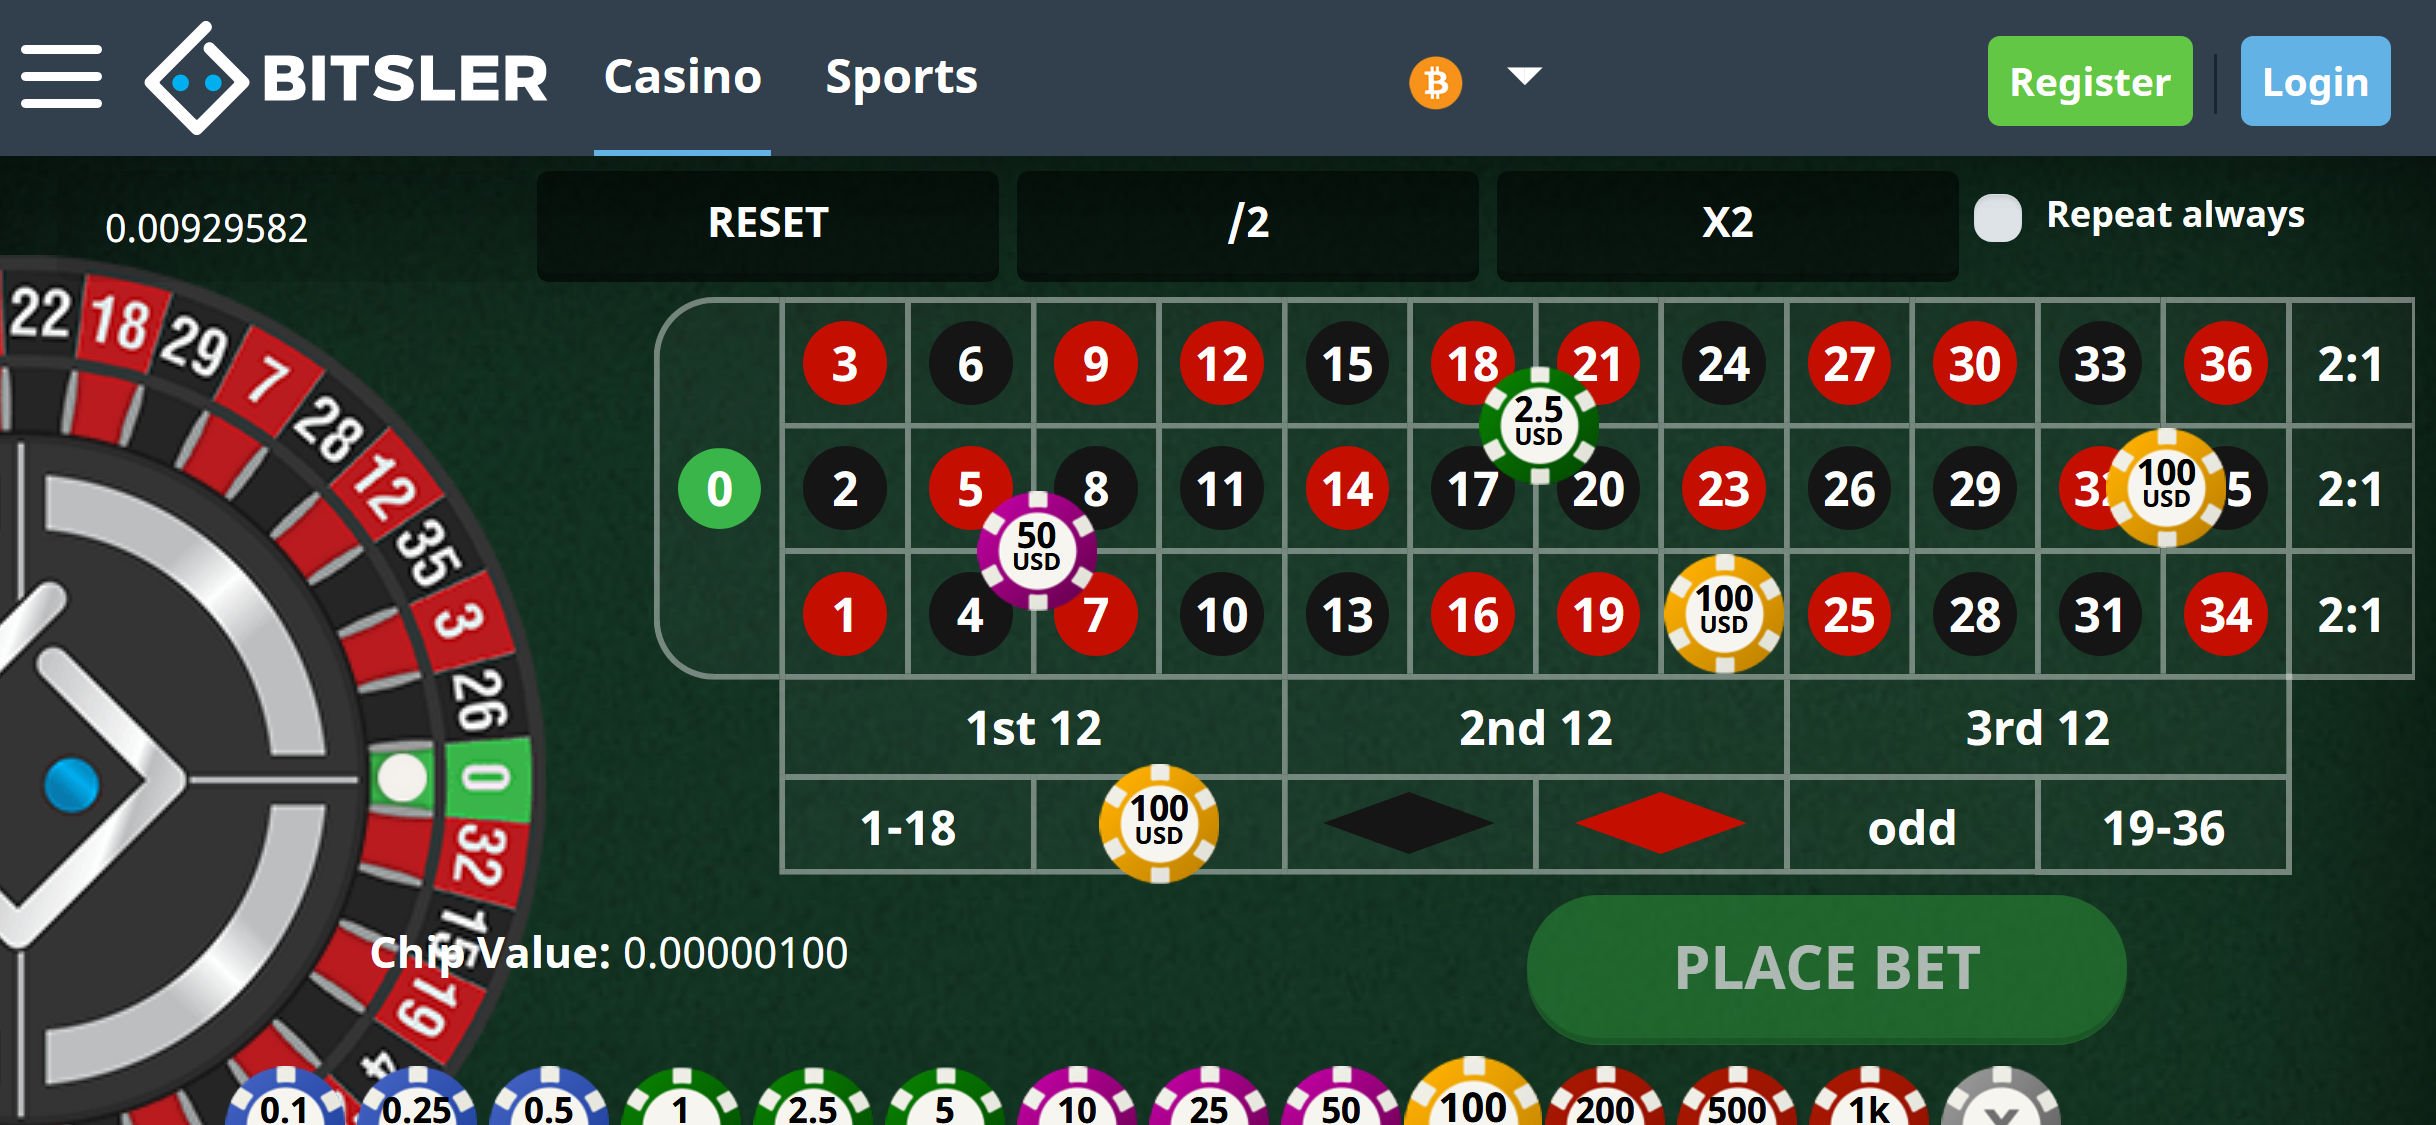 Bitsler Casino Mobile Casino Games Review